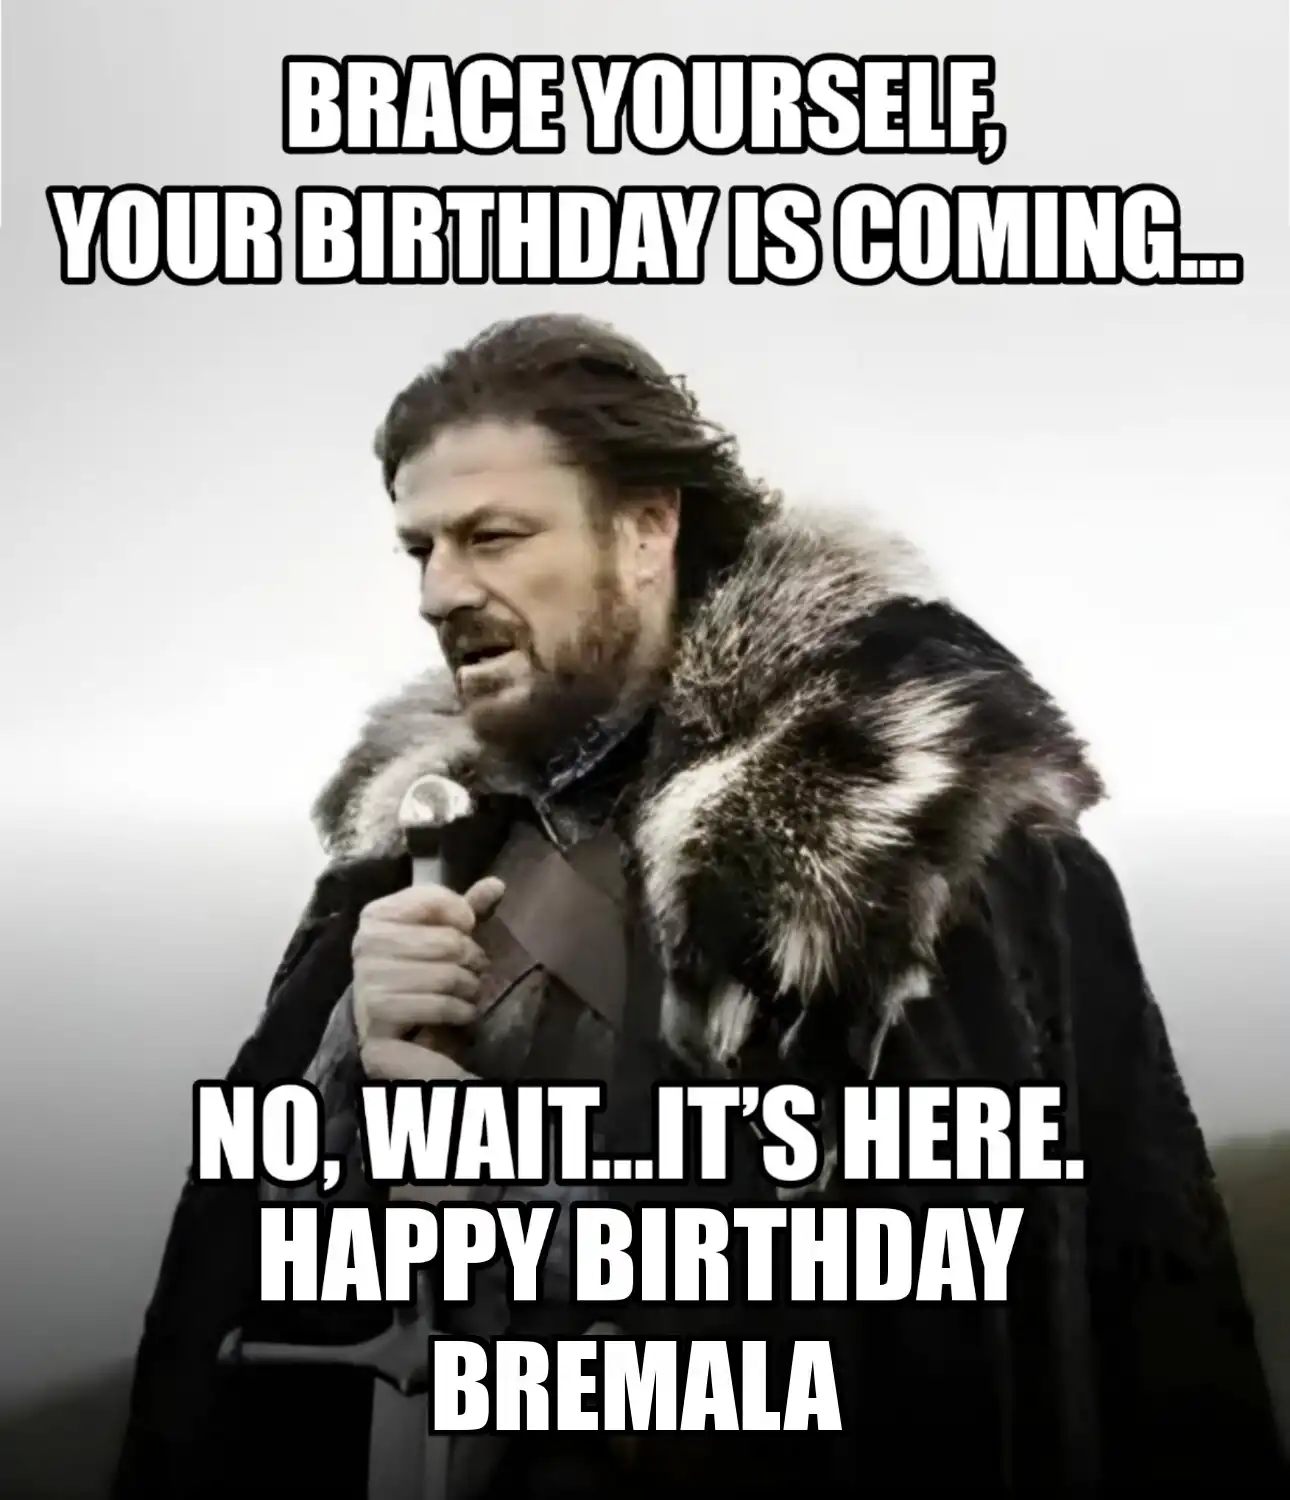 Happy Birthday Bremala Brace Yourself Your Birthday Is Coming Meme